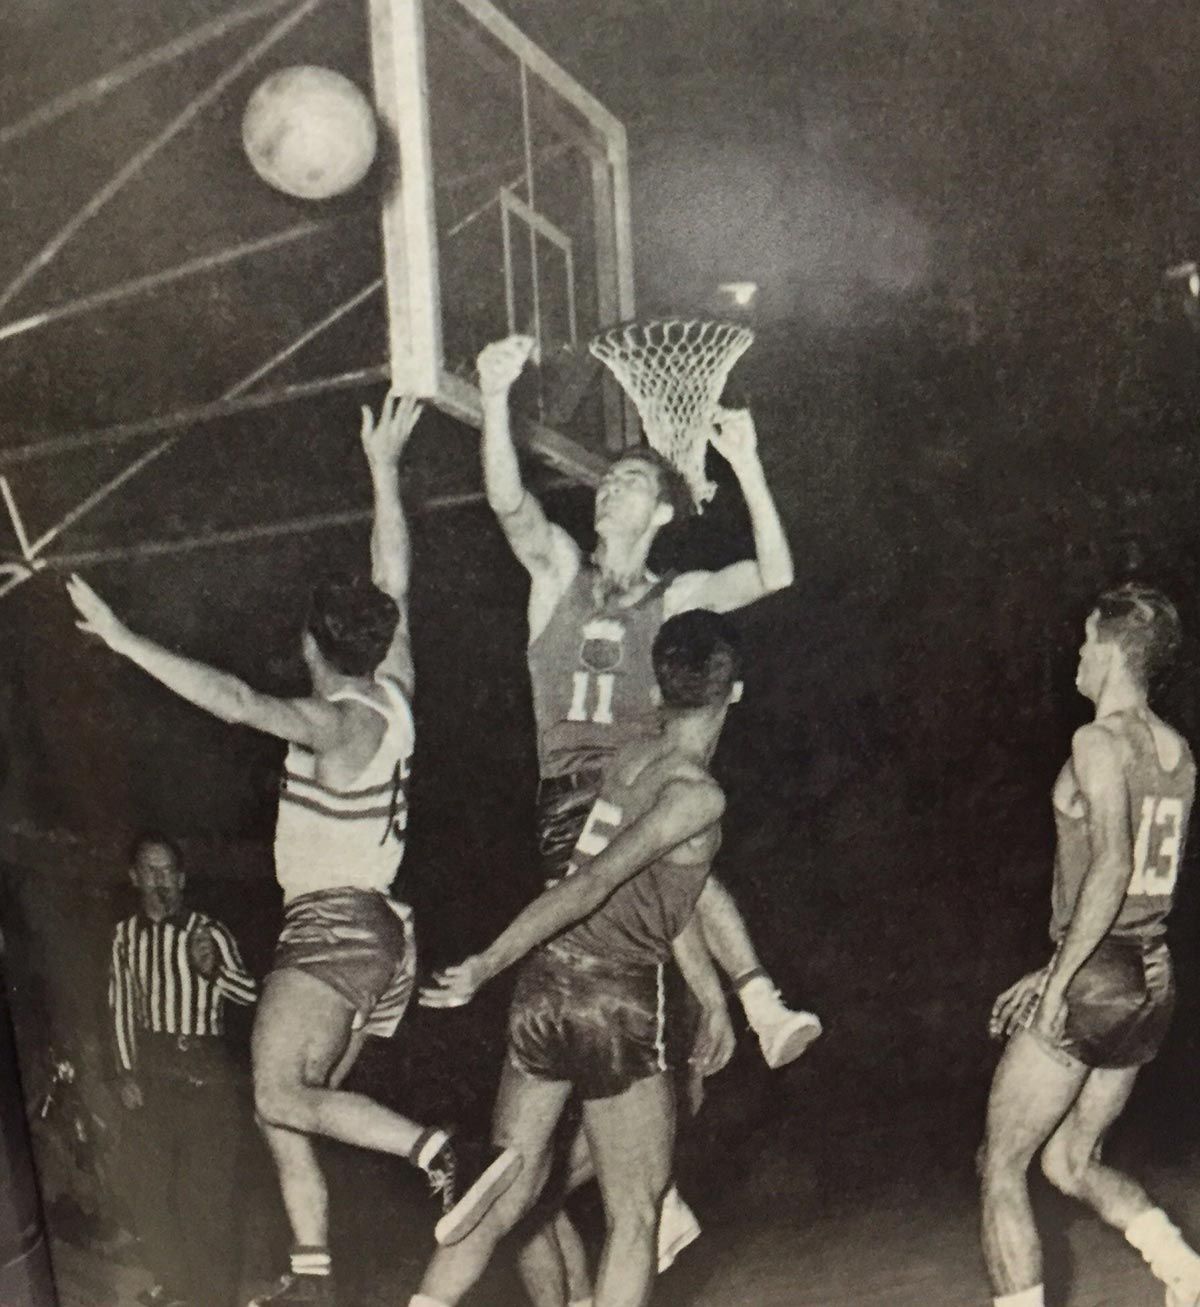 Philippine Team Placed Third In 1954 World Basketball